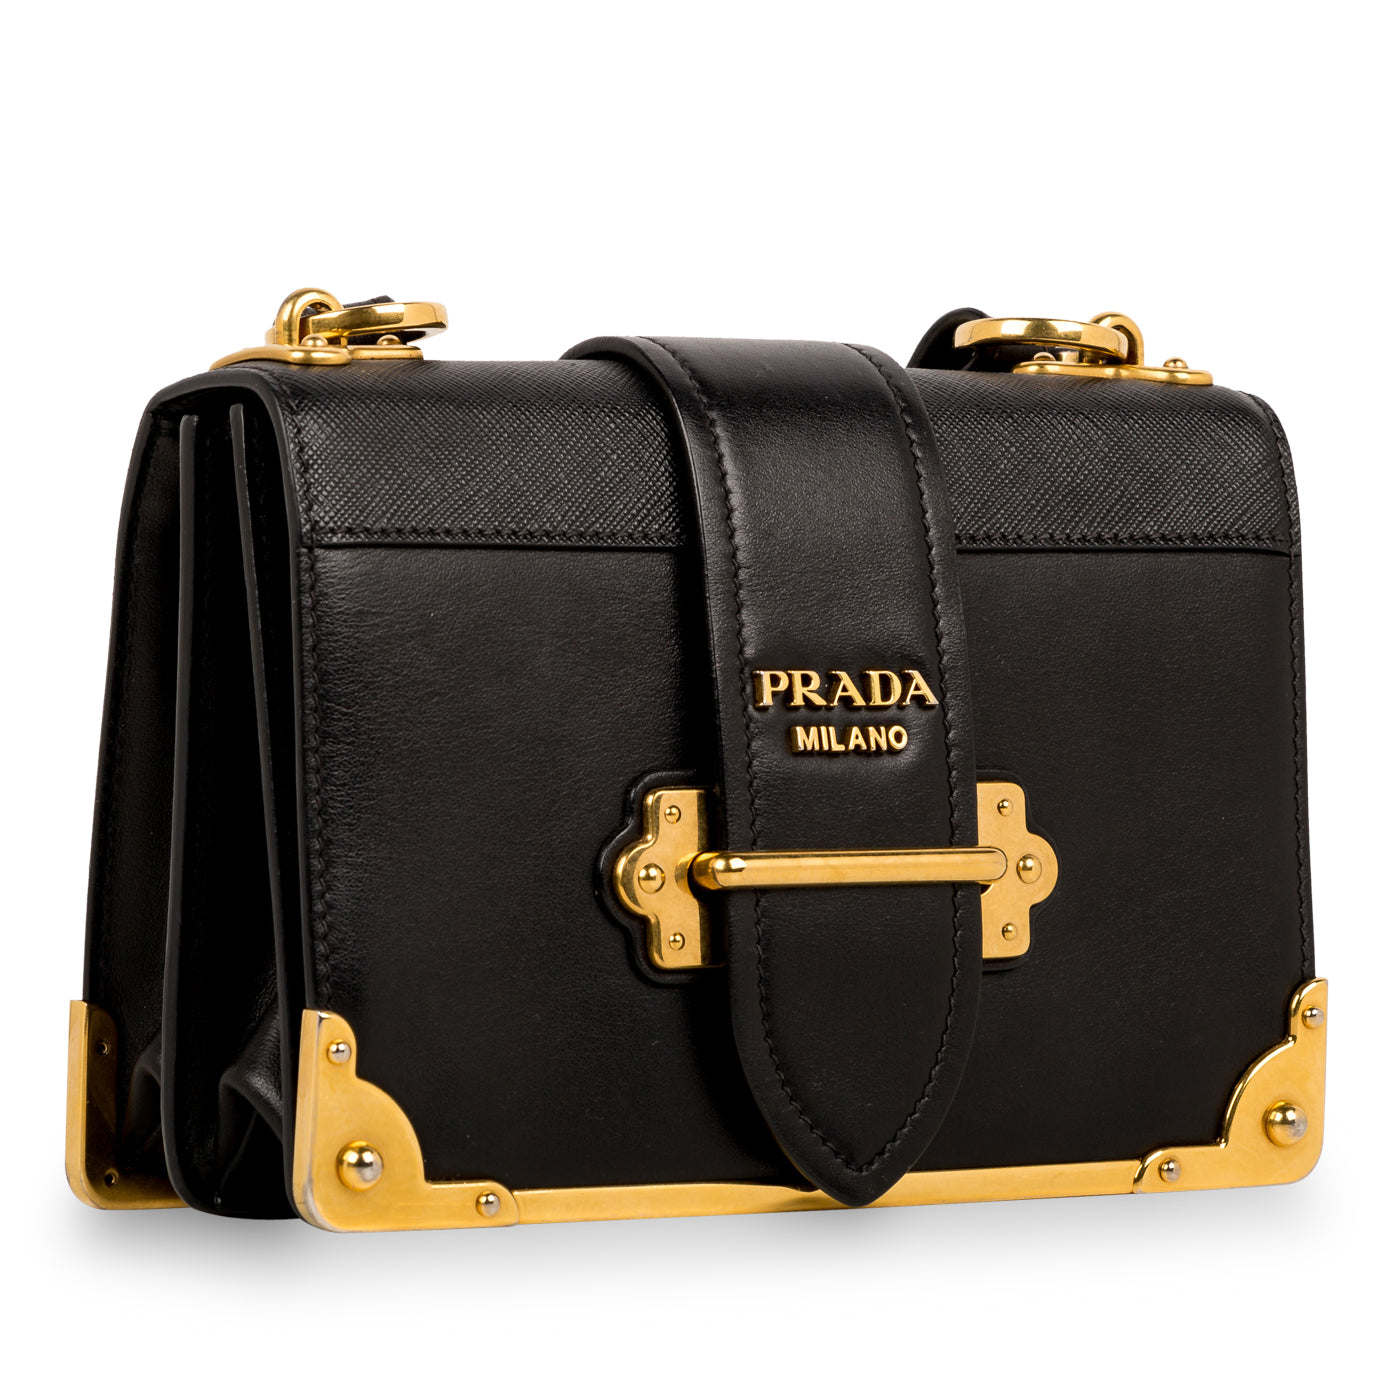 Prada Leather Cahier Bag in Black